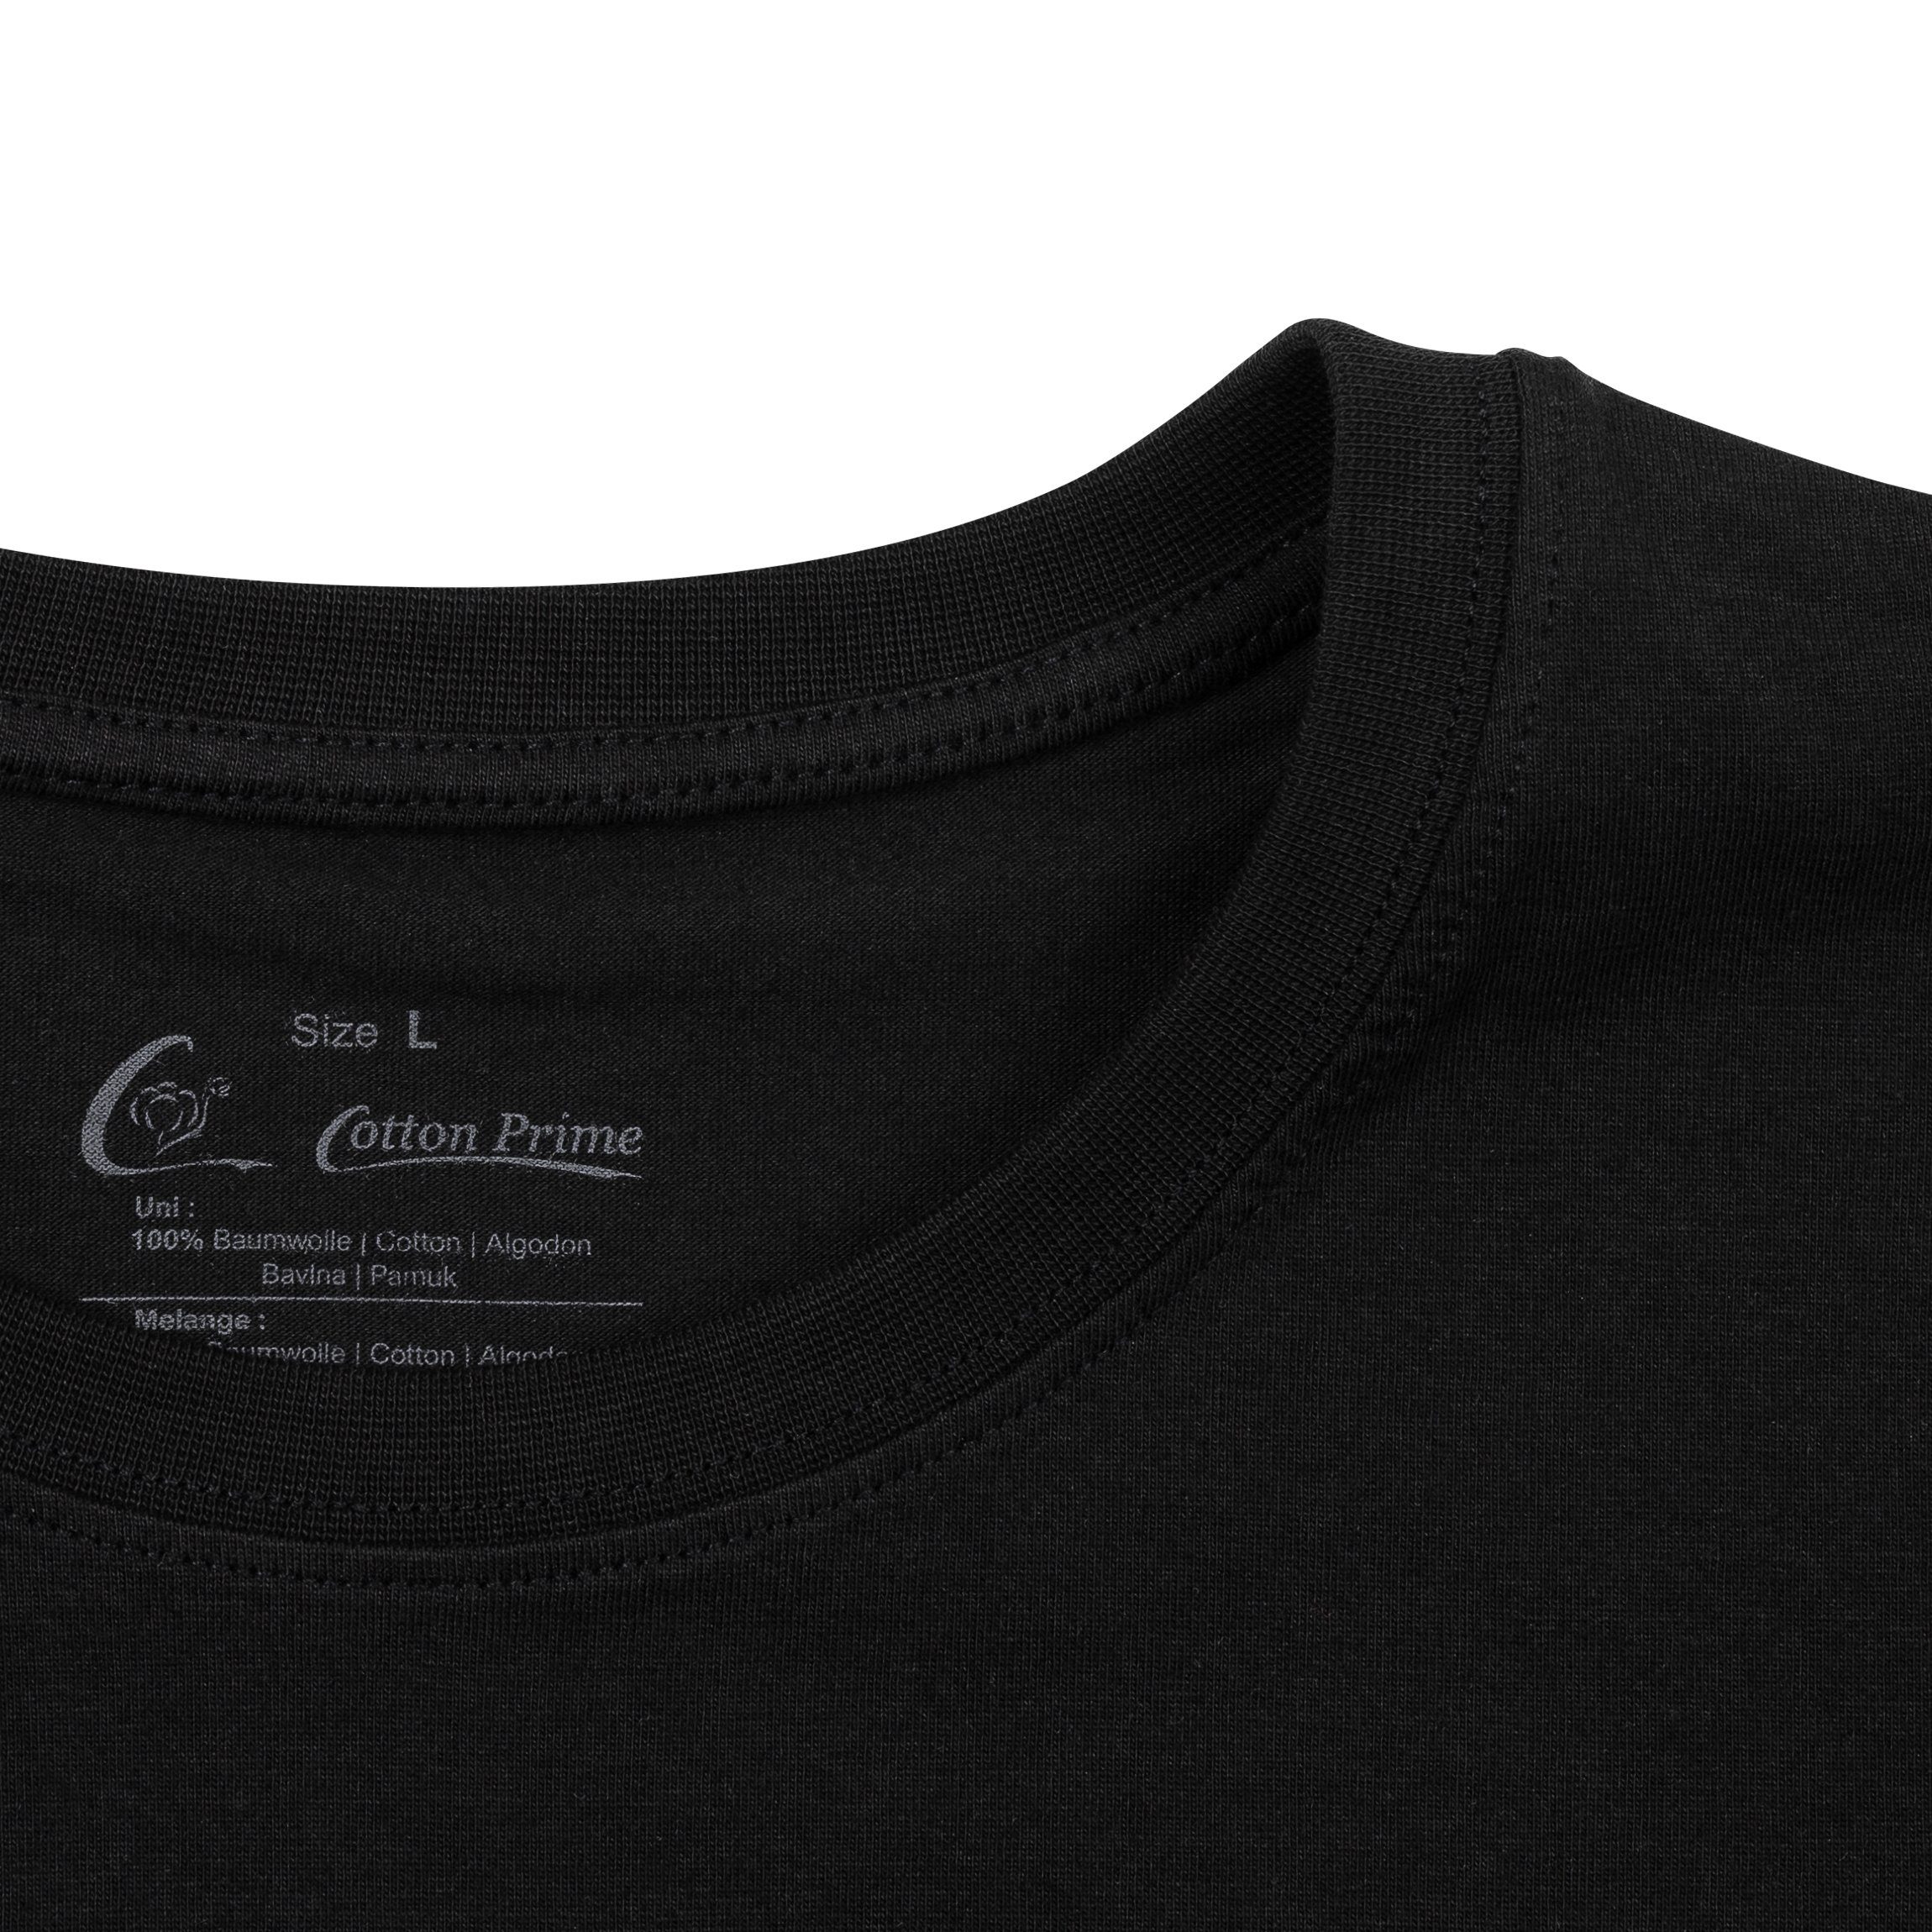 schwarz Prime® on Snowboarding Cotton Skull T-Shirt